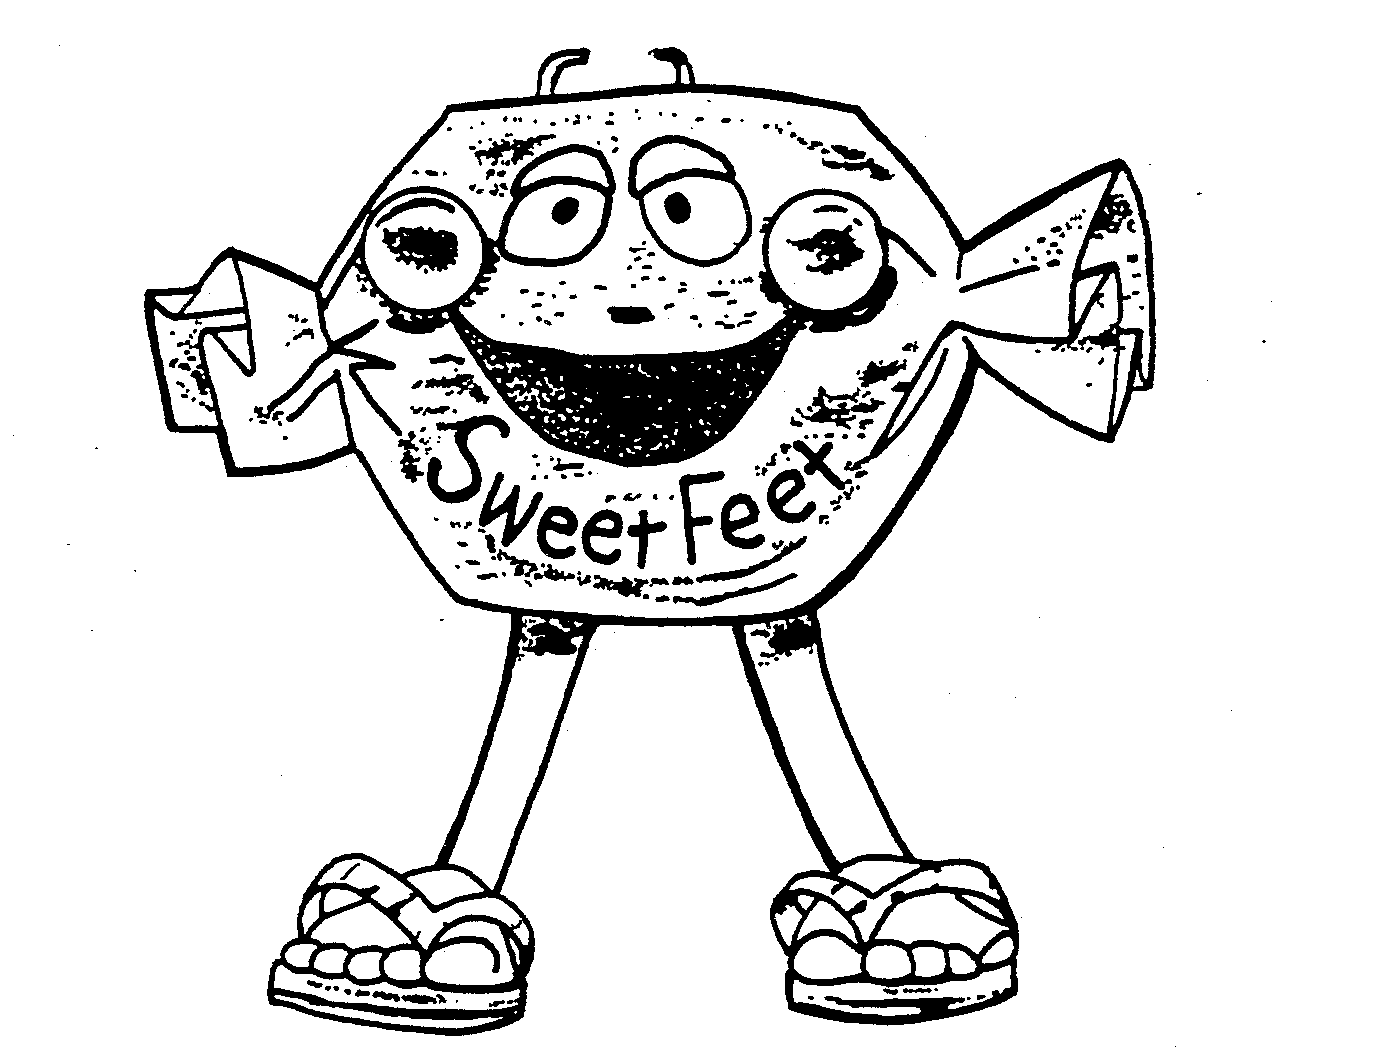 Trademark Logo SWEET FEET